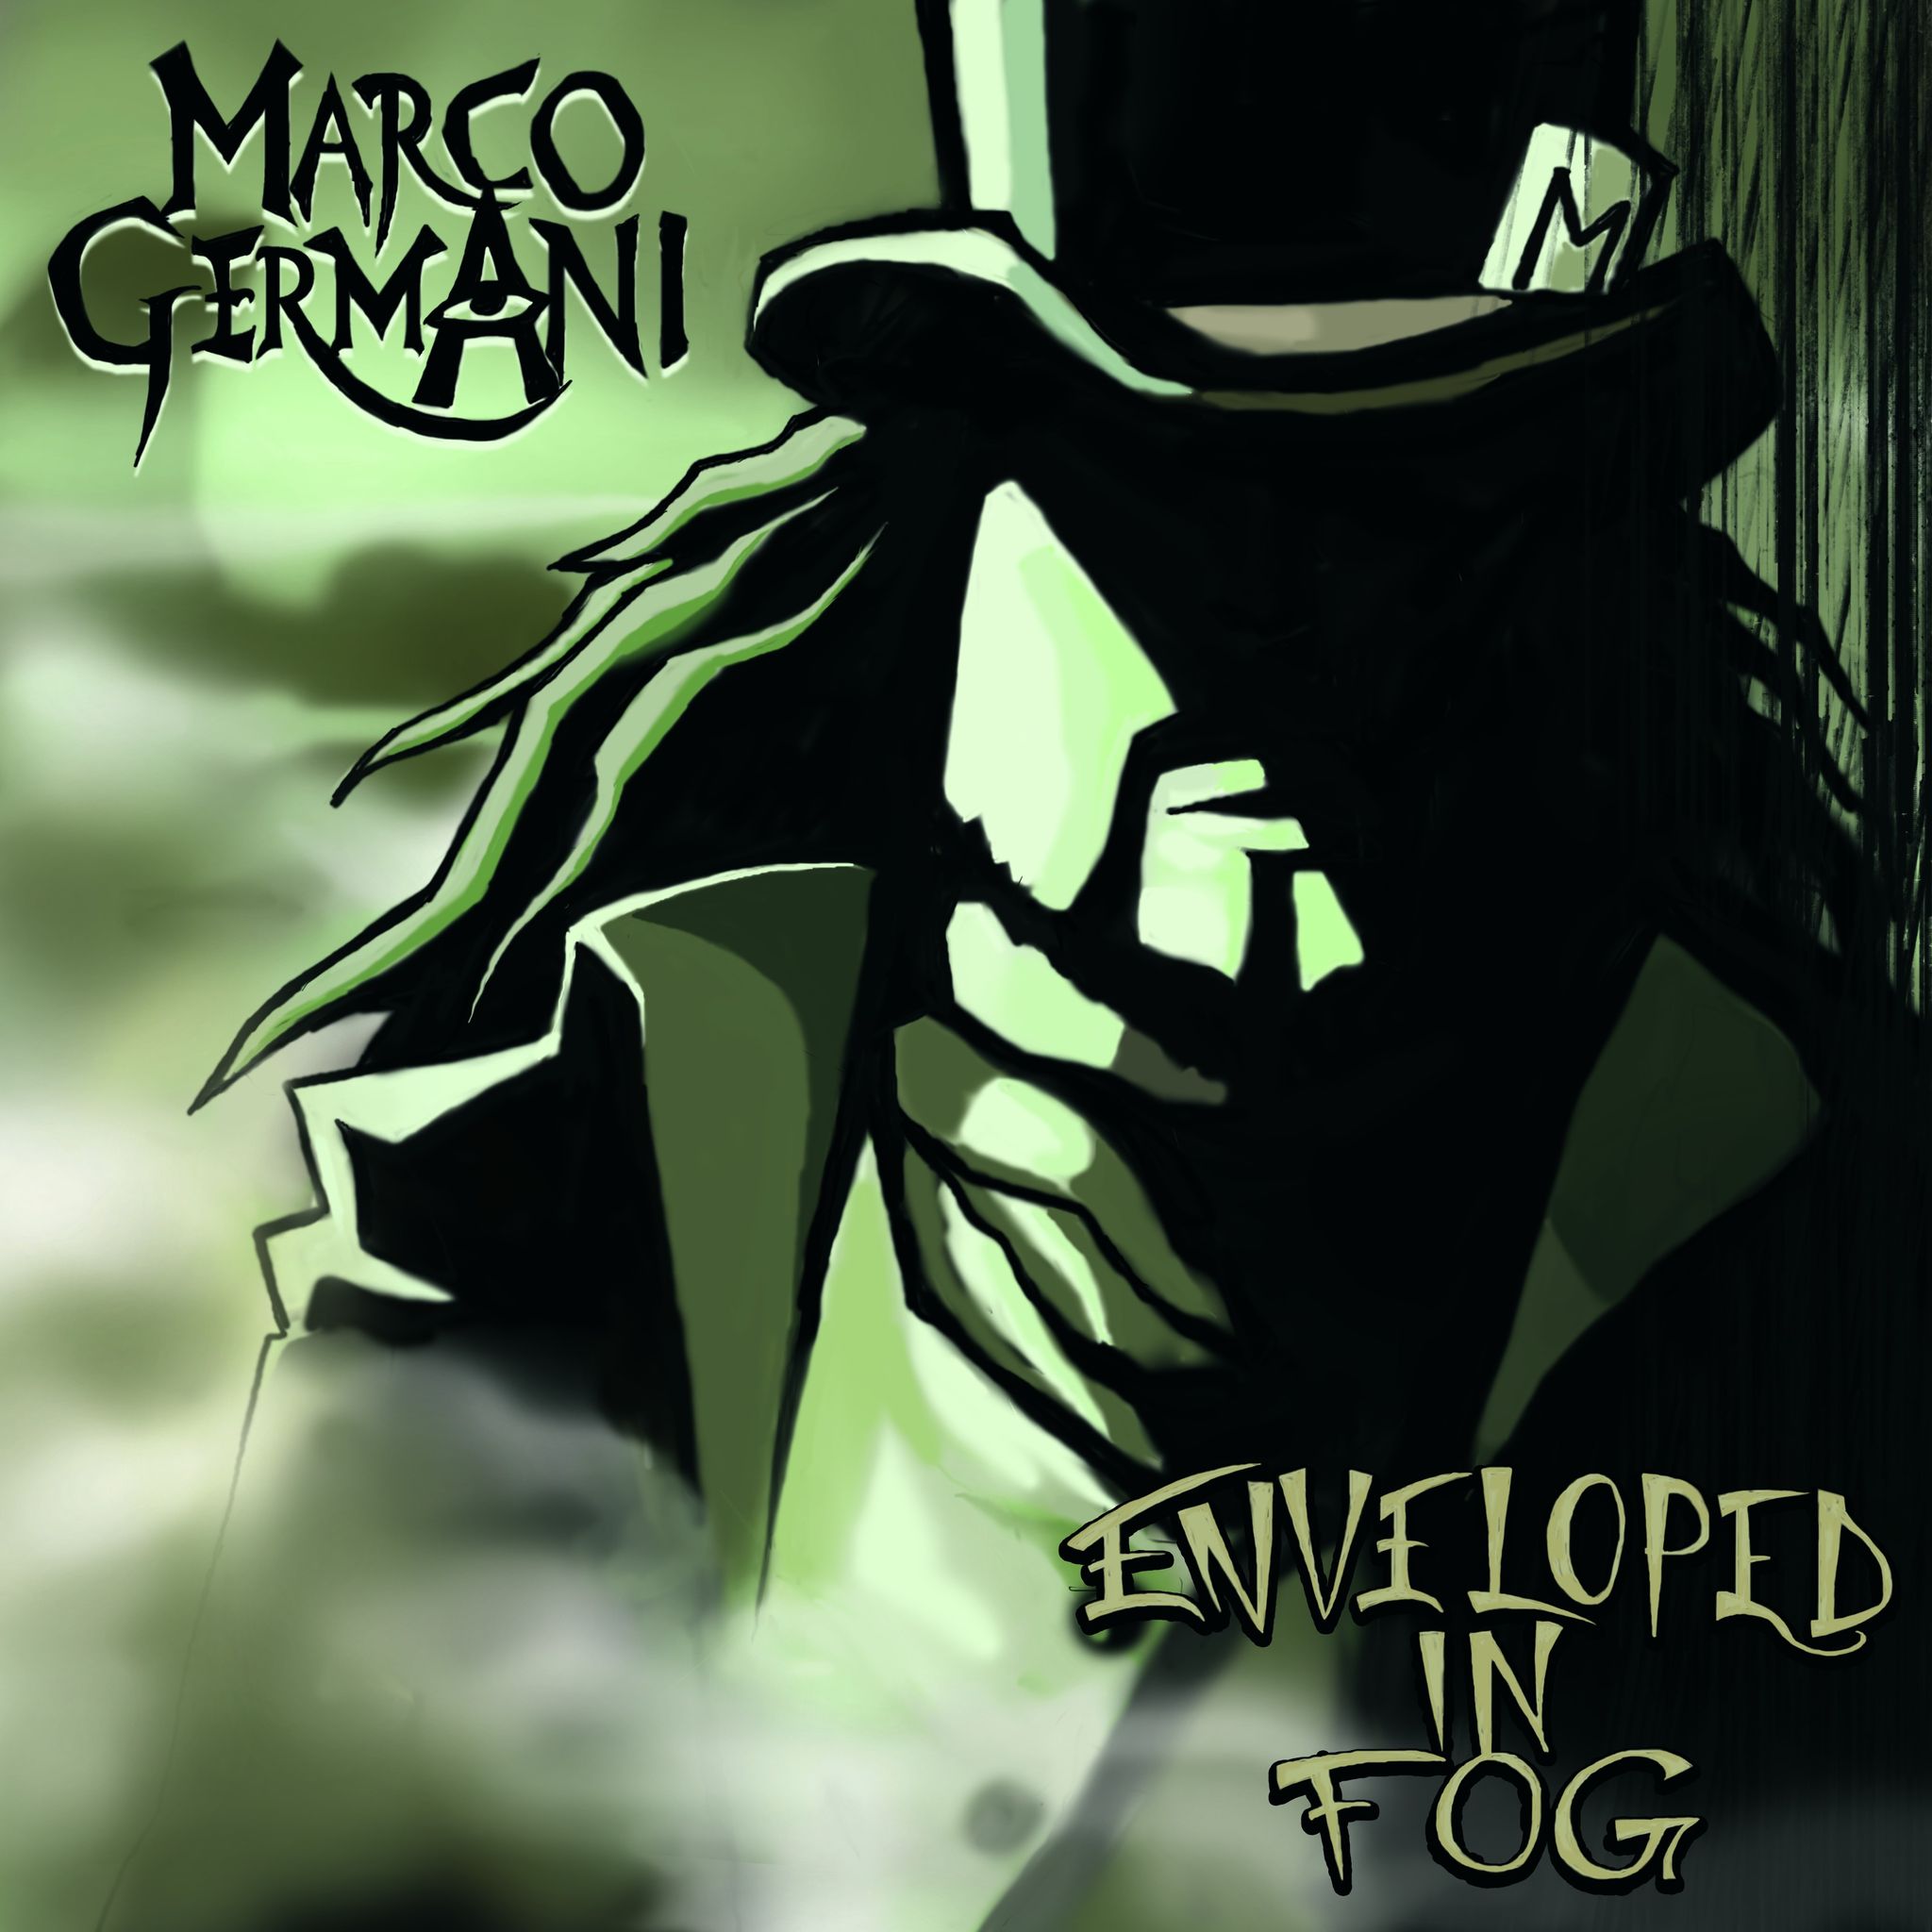 Marco Germani – “Enveloped in Fog”